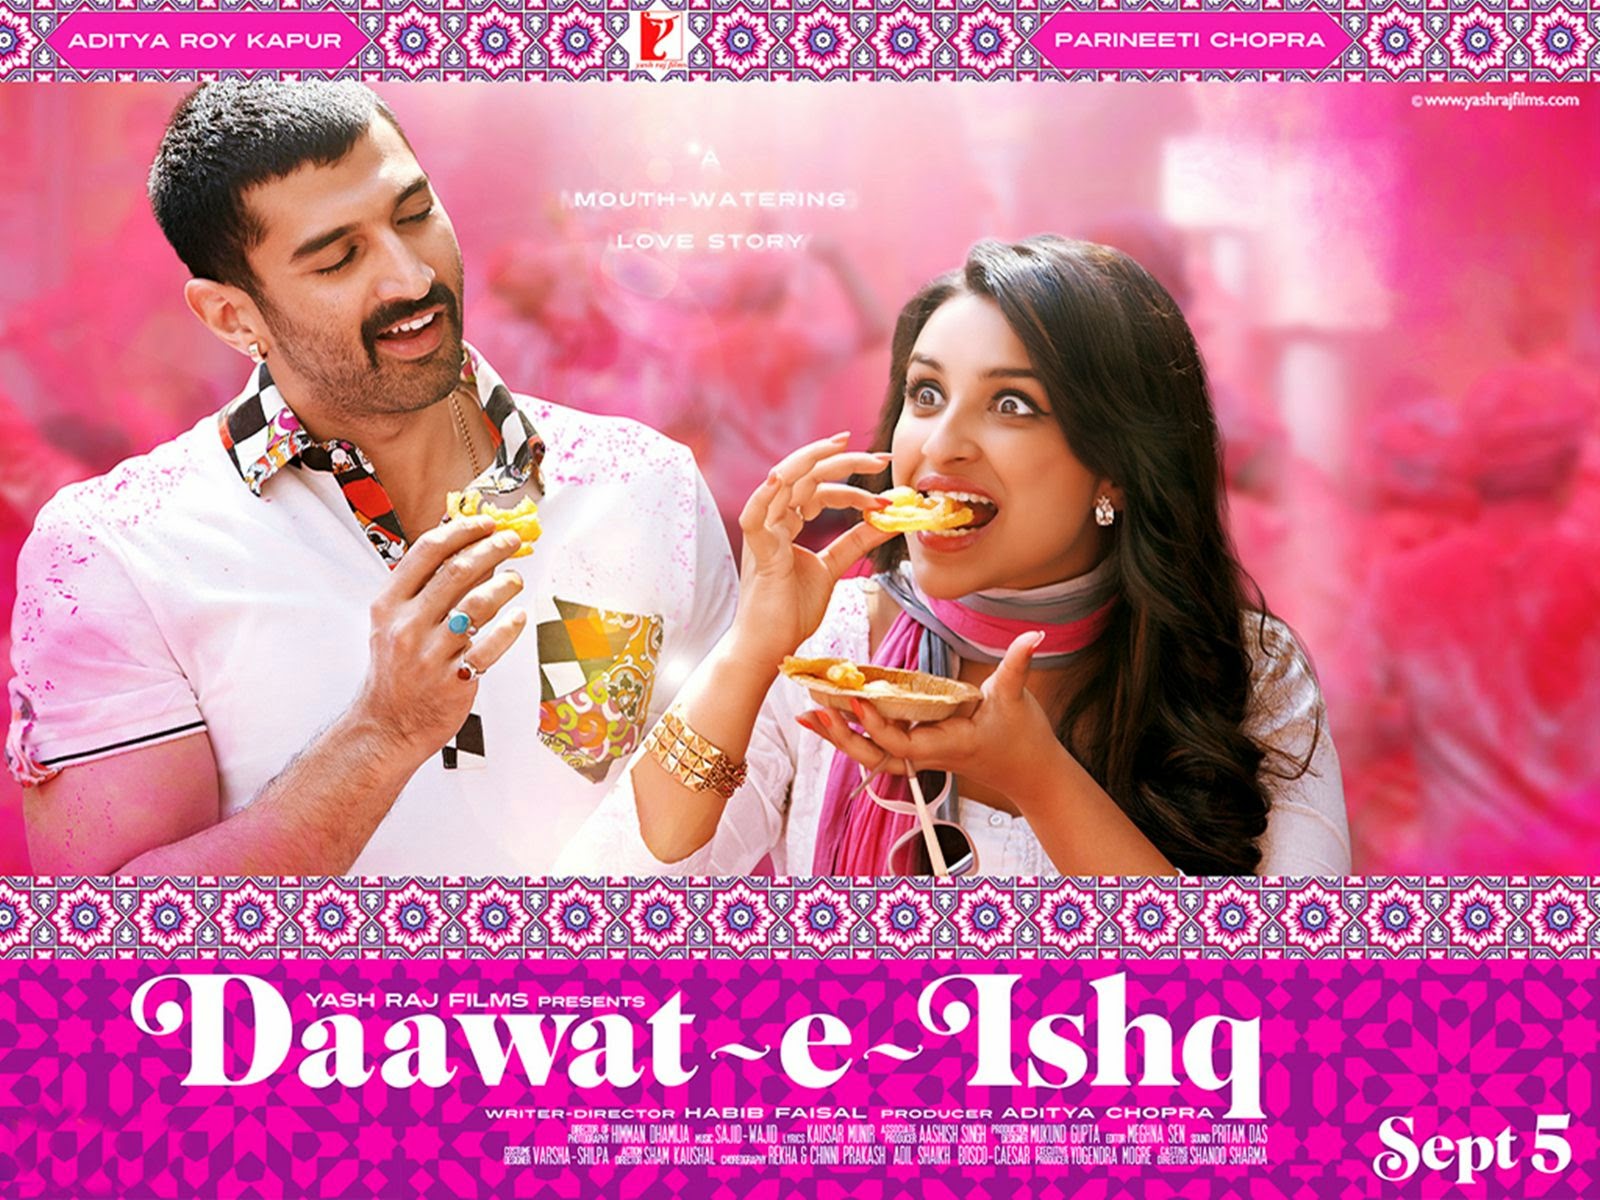 Daawat-e-Ishq Hindi Dubbed Mp4 Movie Download